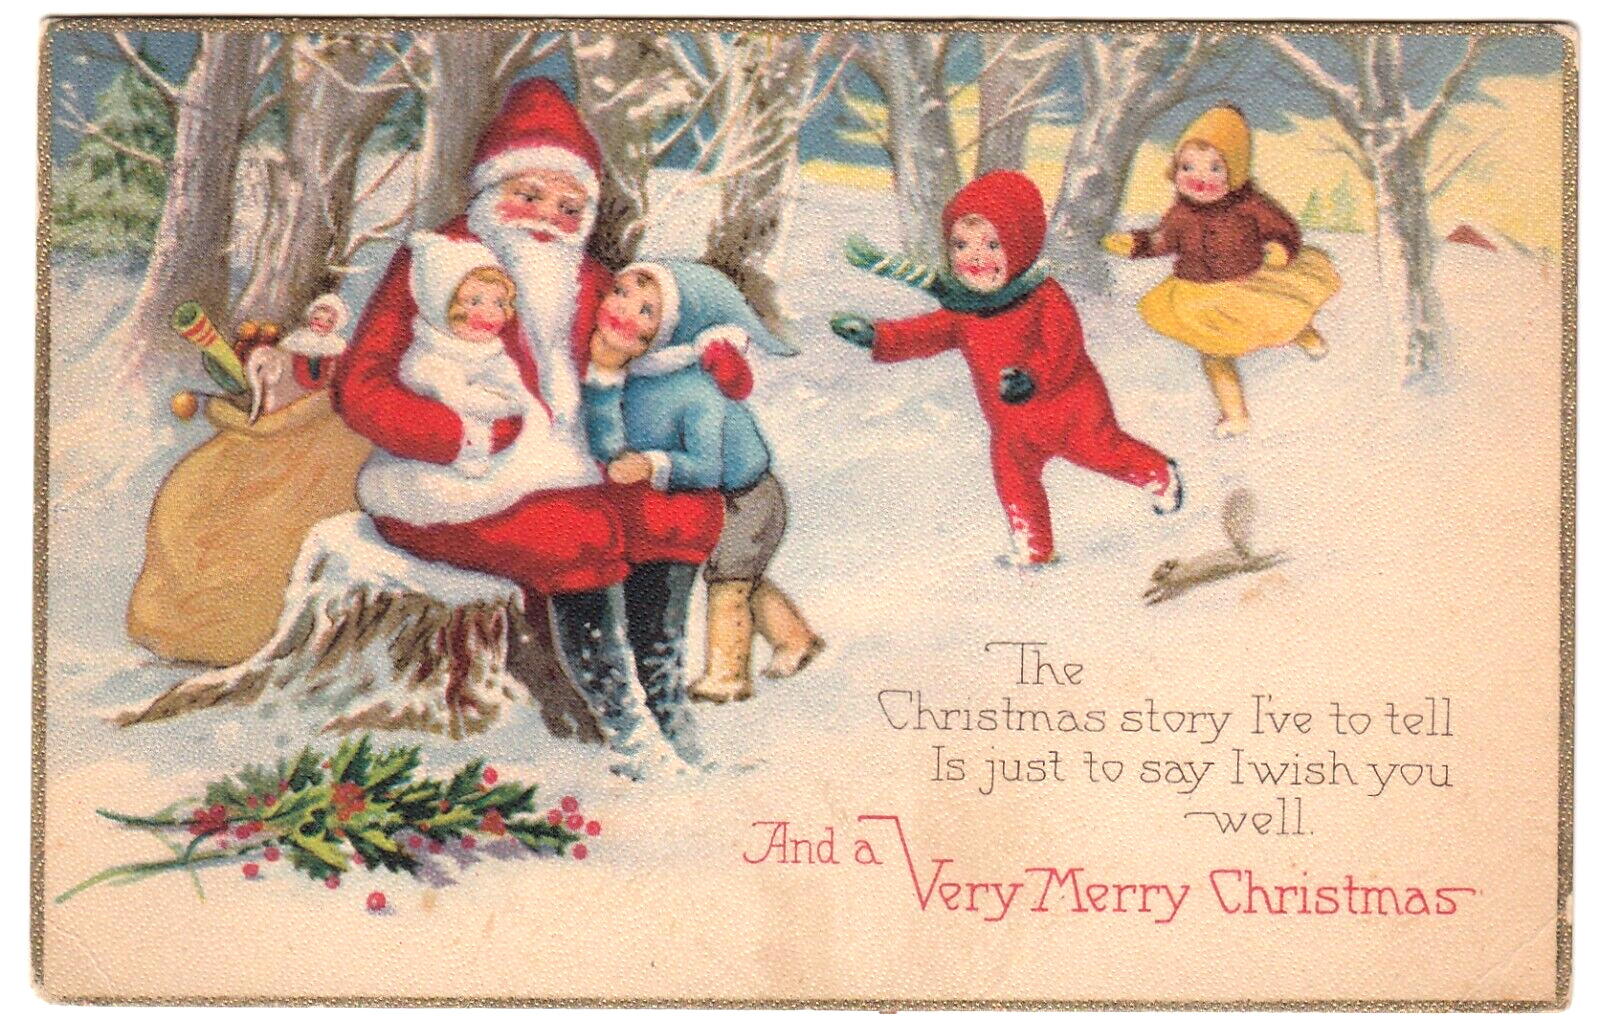 Children Greet Santa Claus in Wintery Forest ~Vintage Stecher Christmas Postcard